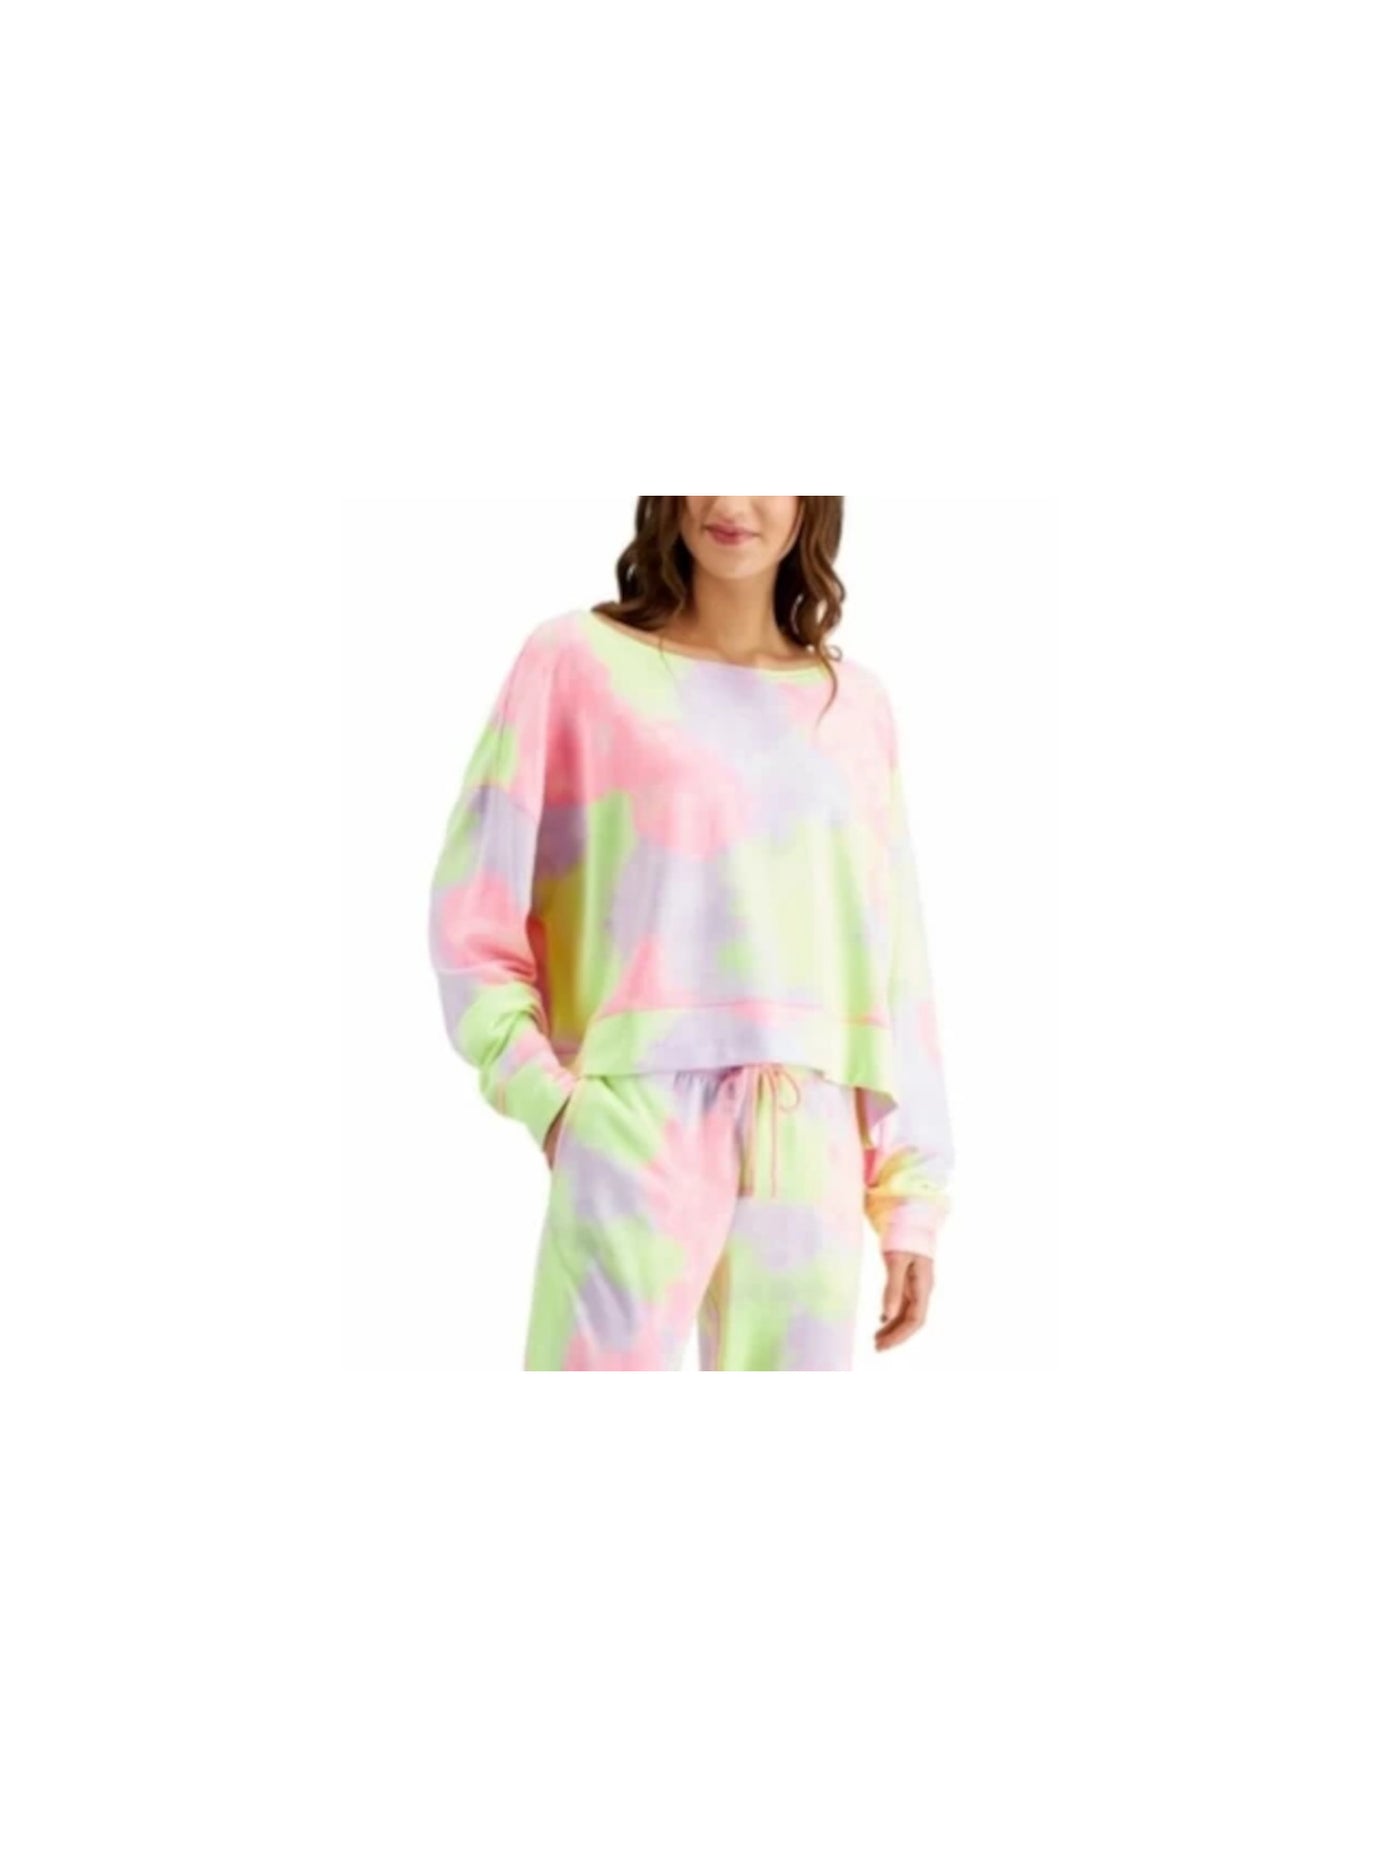 JENNI Intimates Pink Crewneck Cropped Sweatshirt Sleep Shirt Pajama Top XL